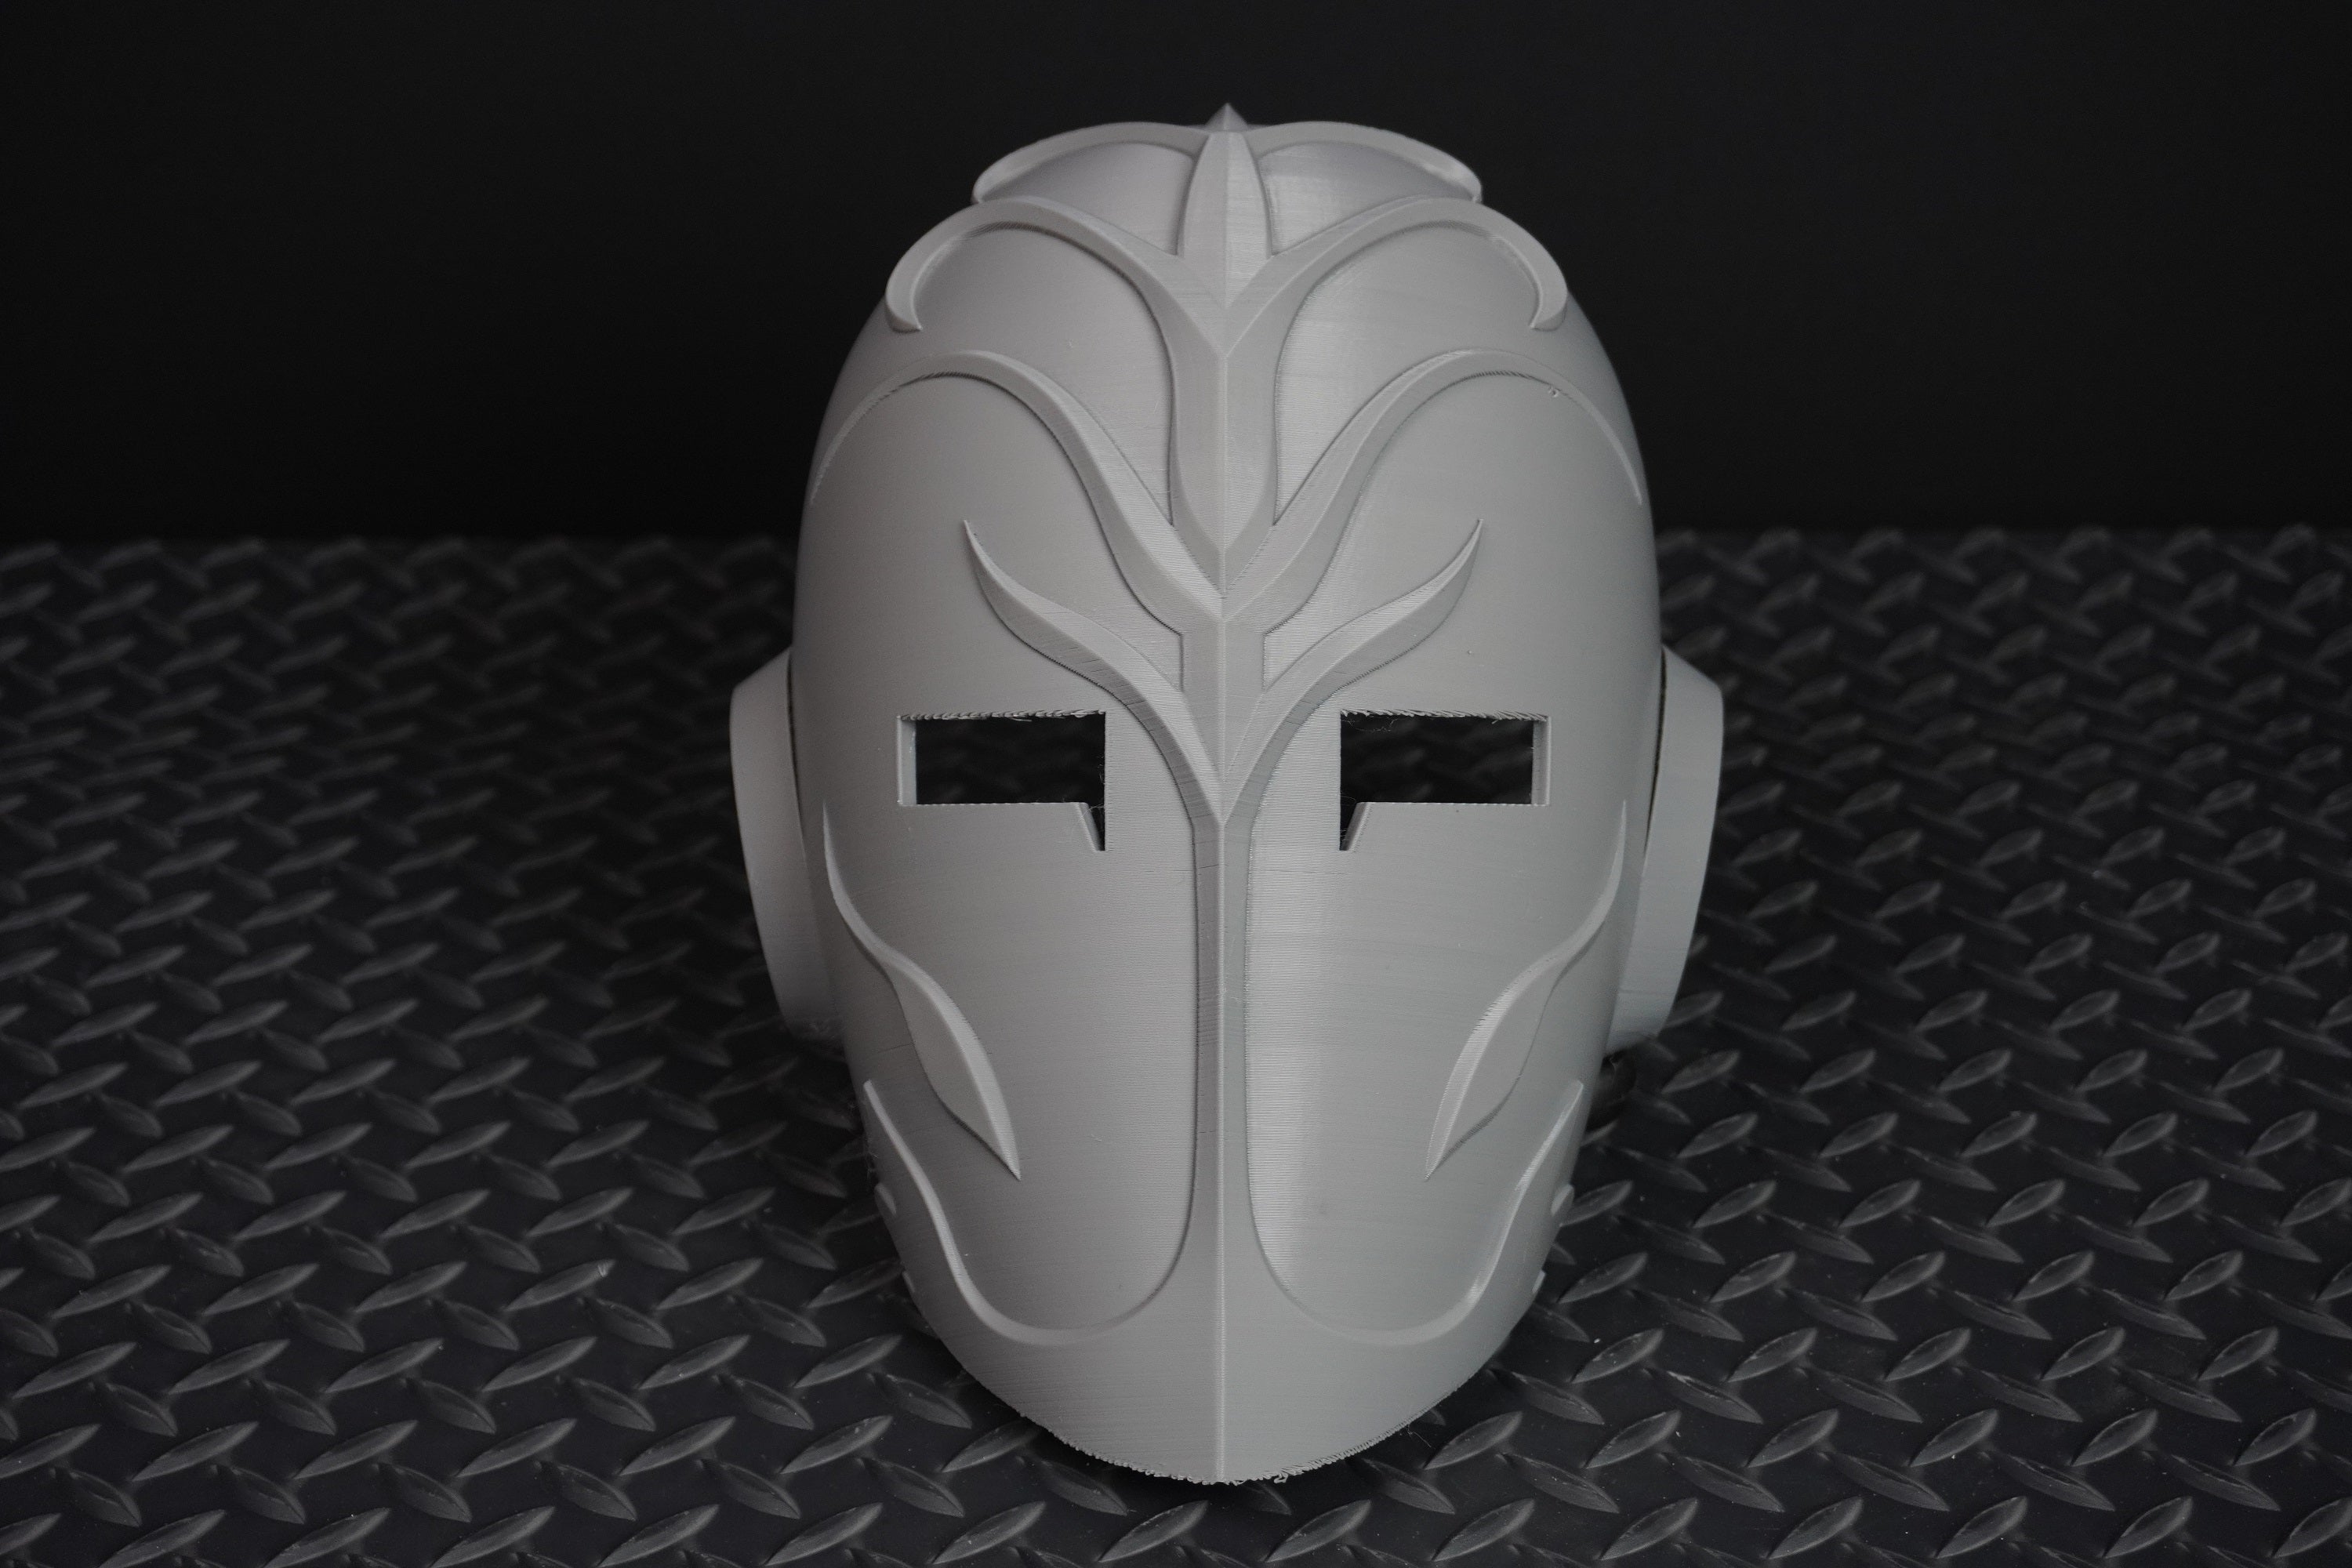 Jedi Temple Guard Mask - DIY